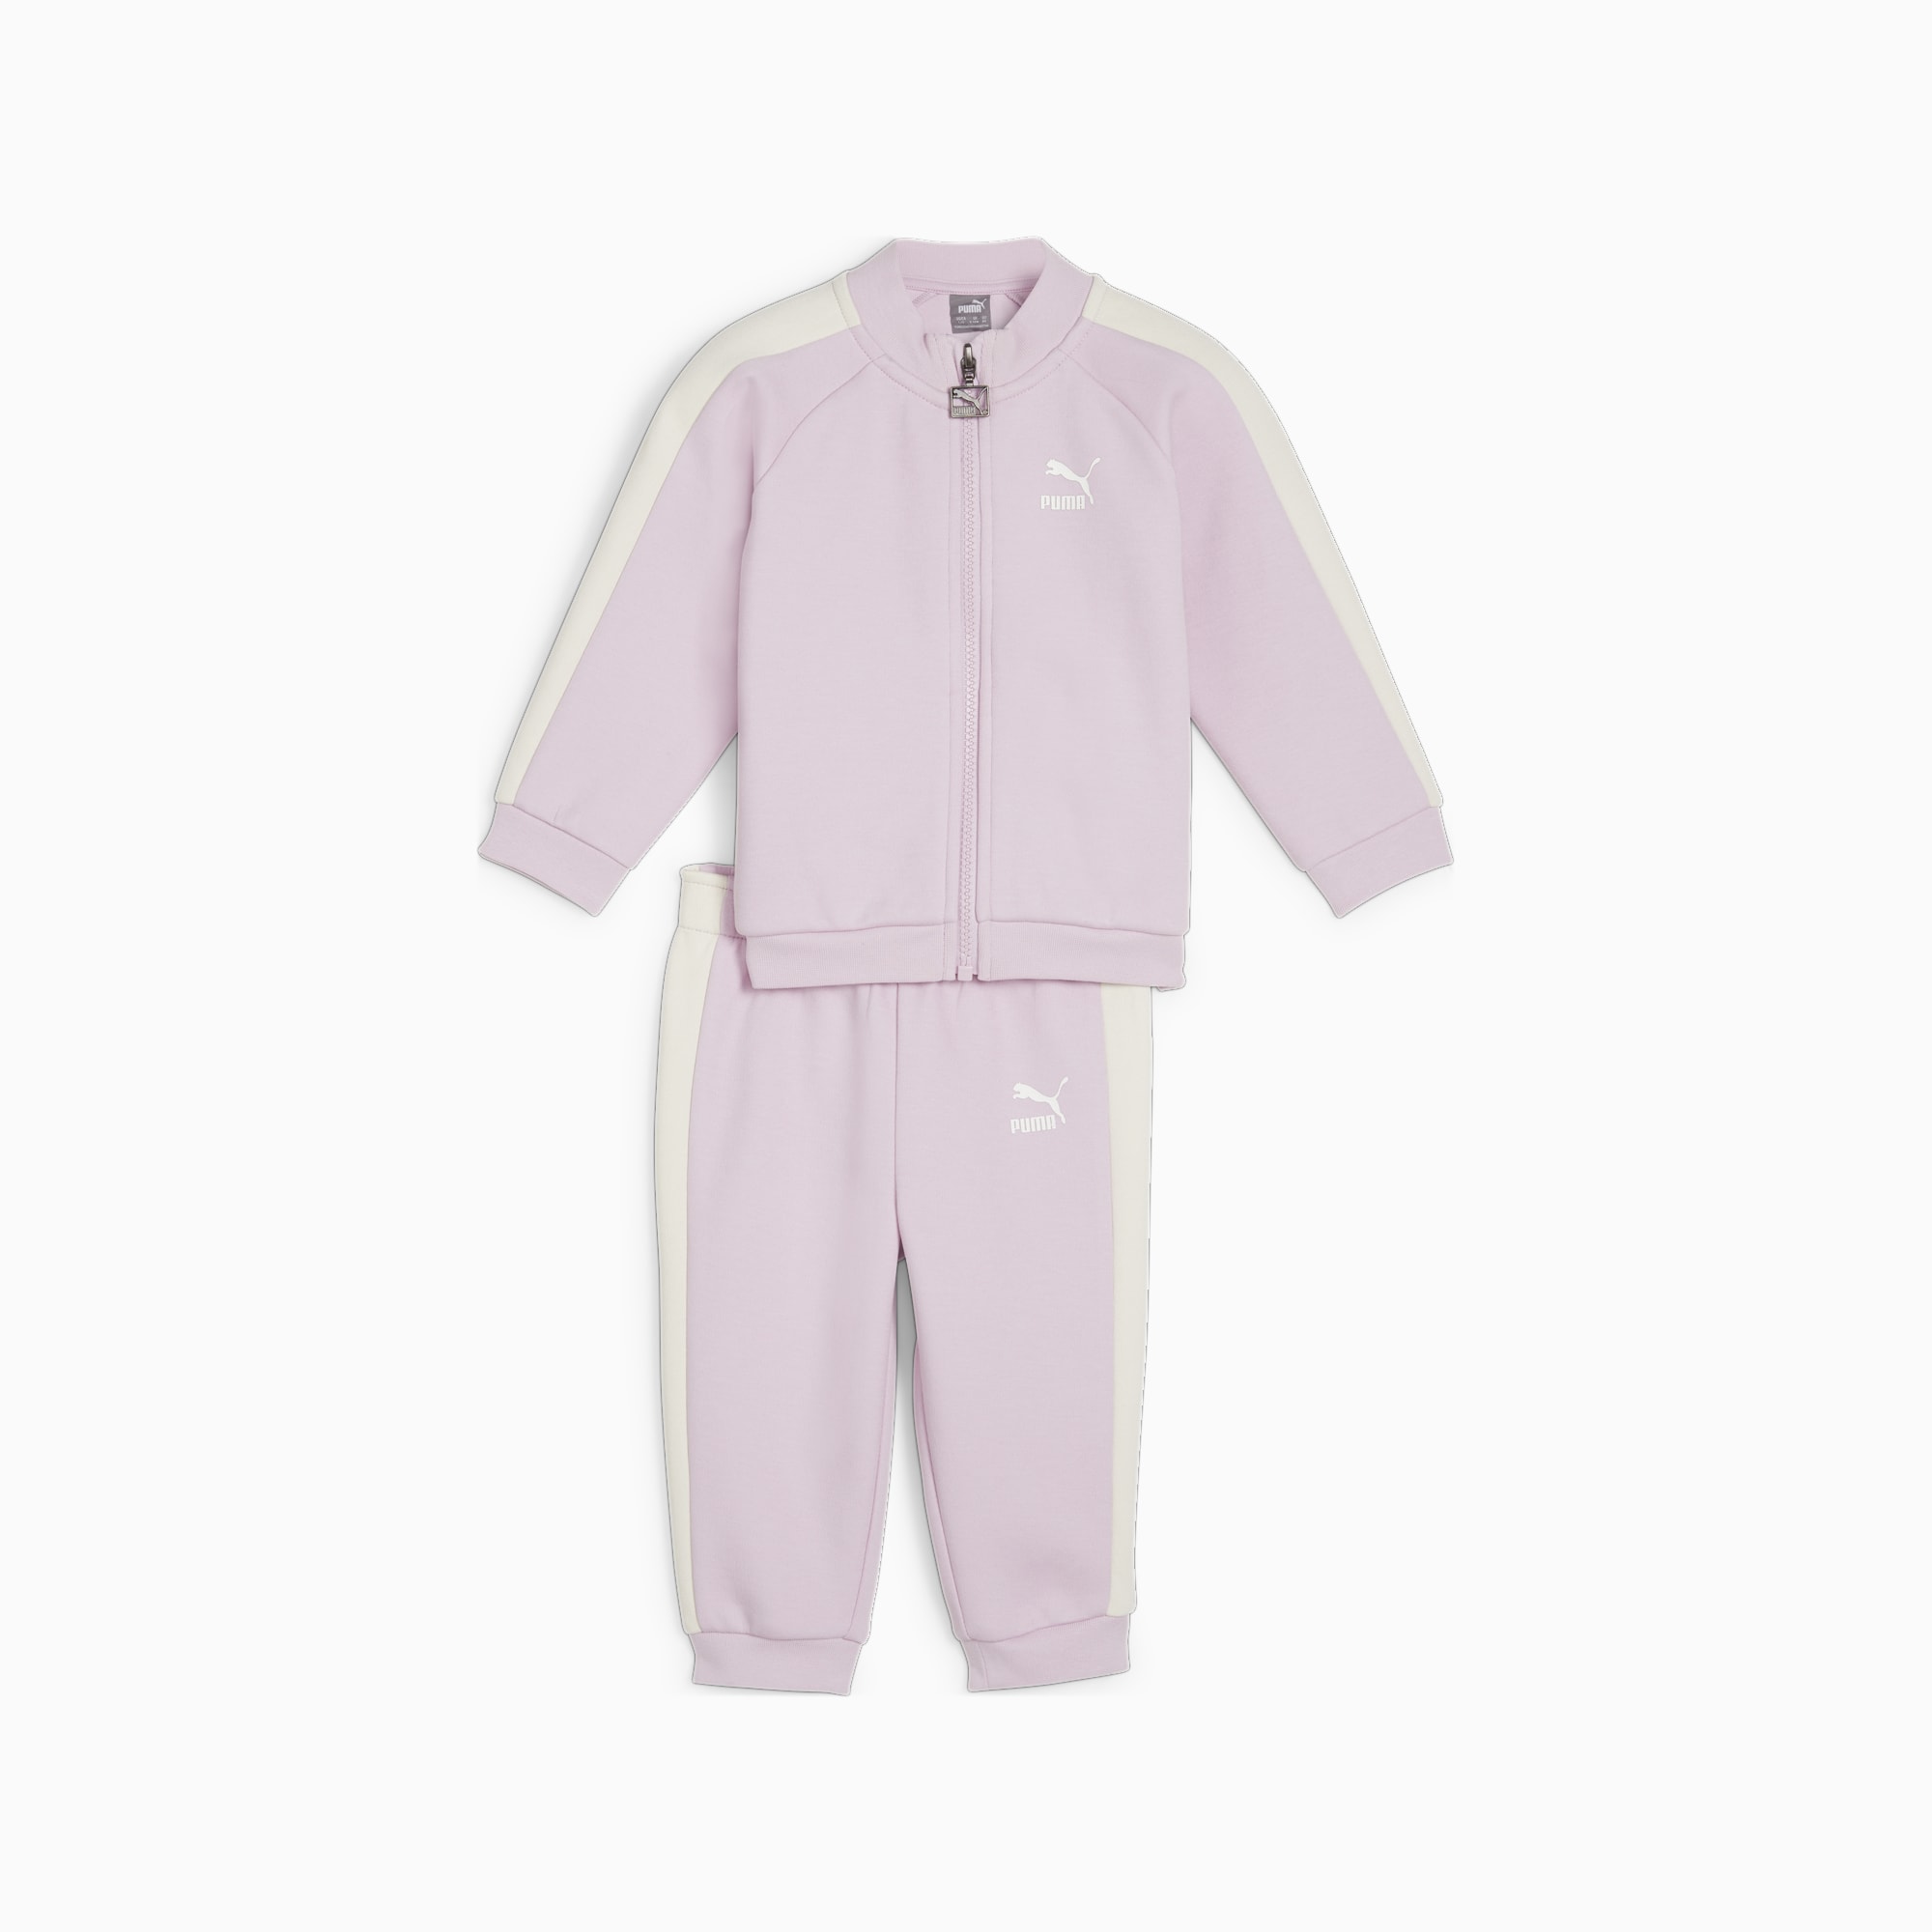 PUMA MINICATS T7 ICONIC Trainingsanzug Baby Für Kinder, Lila, Größe: 74, Kleidung